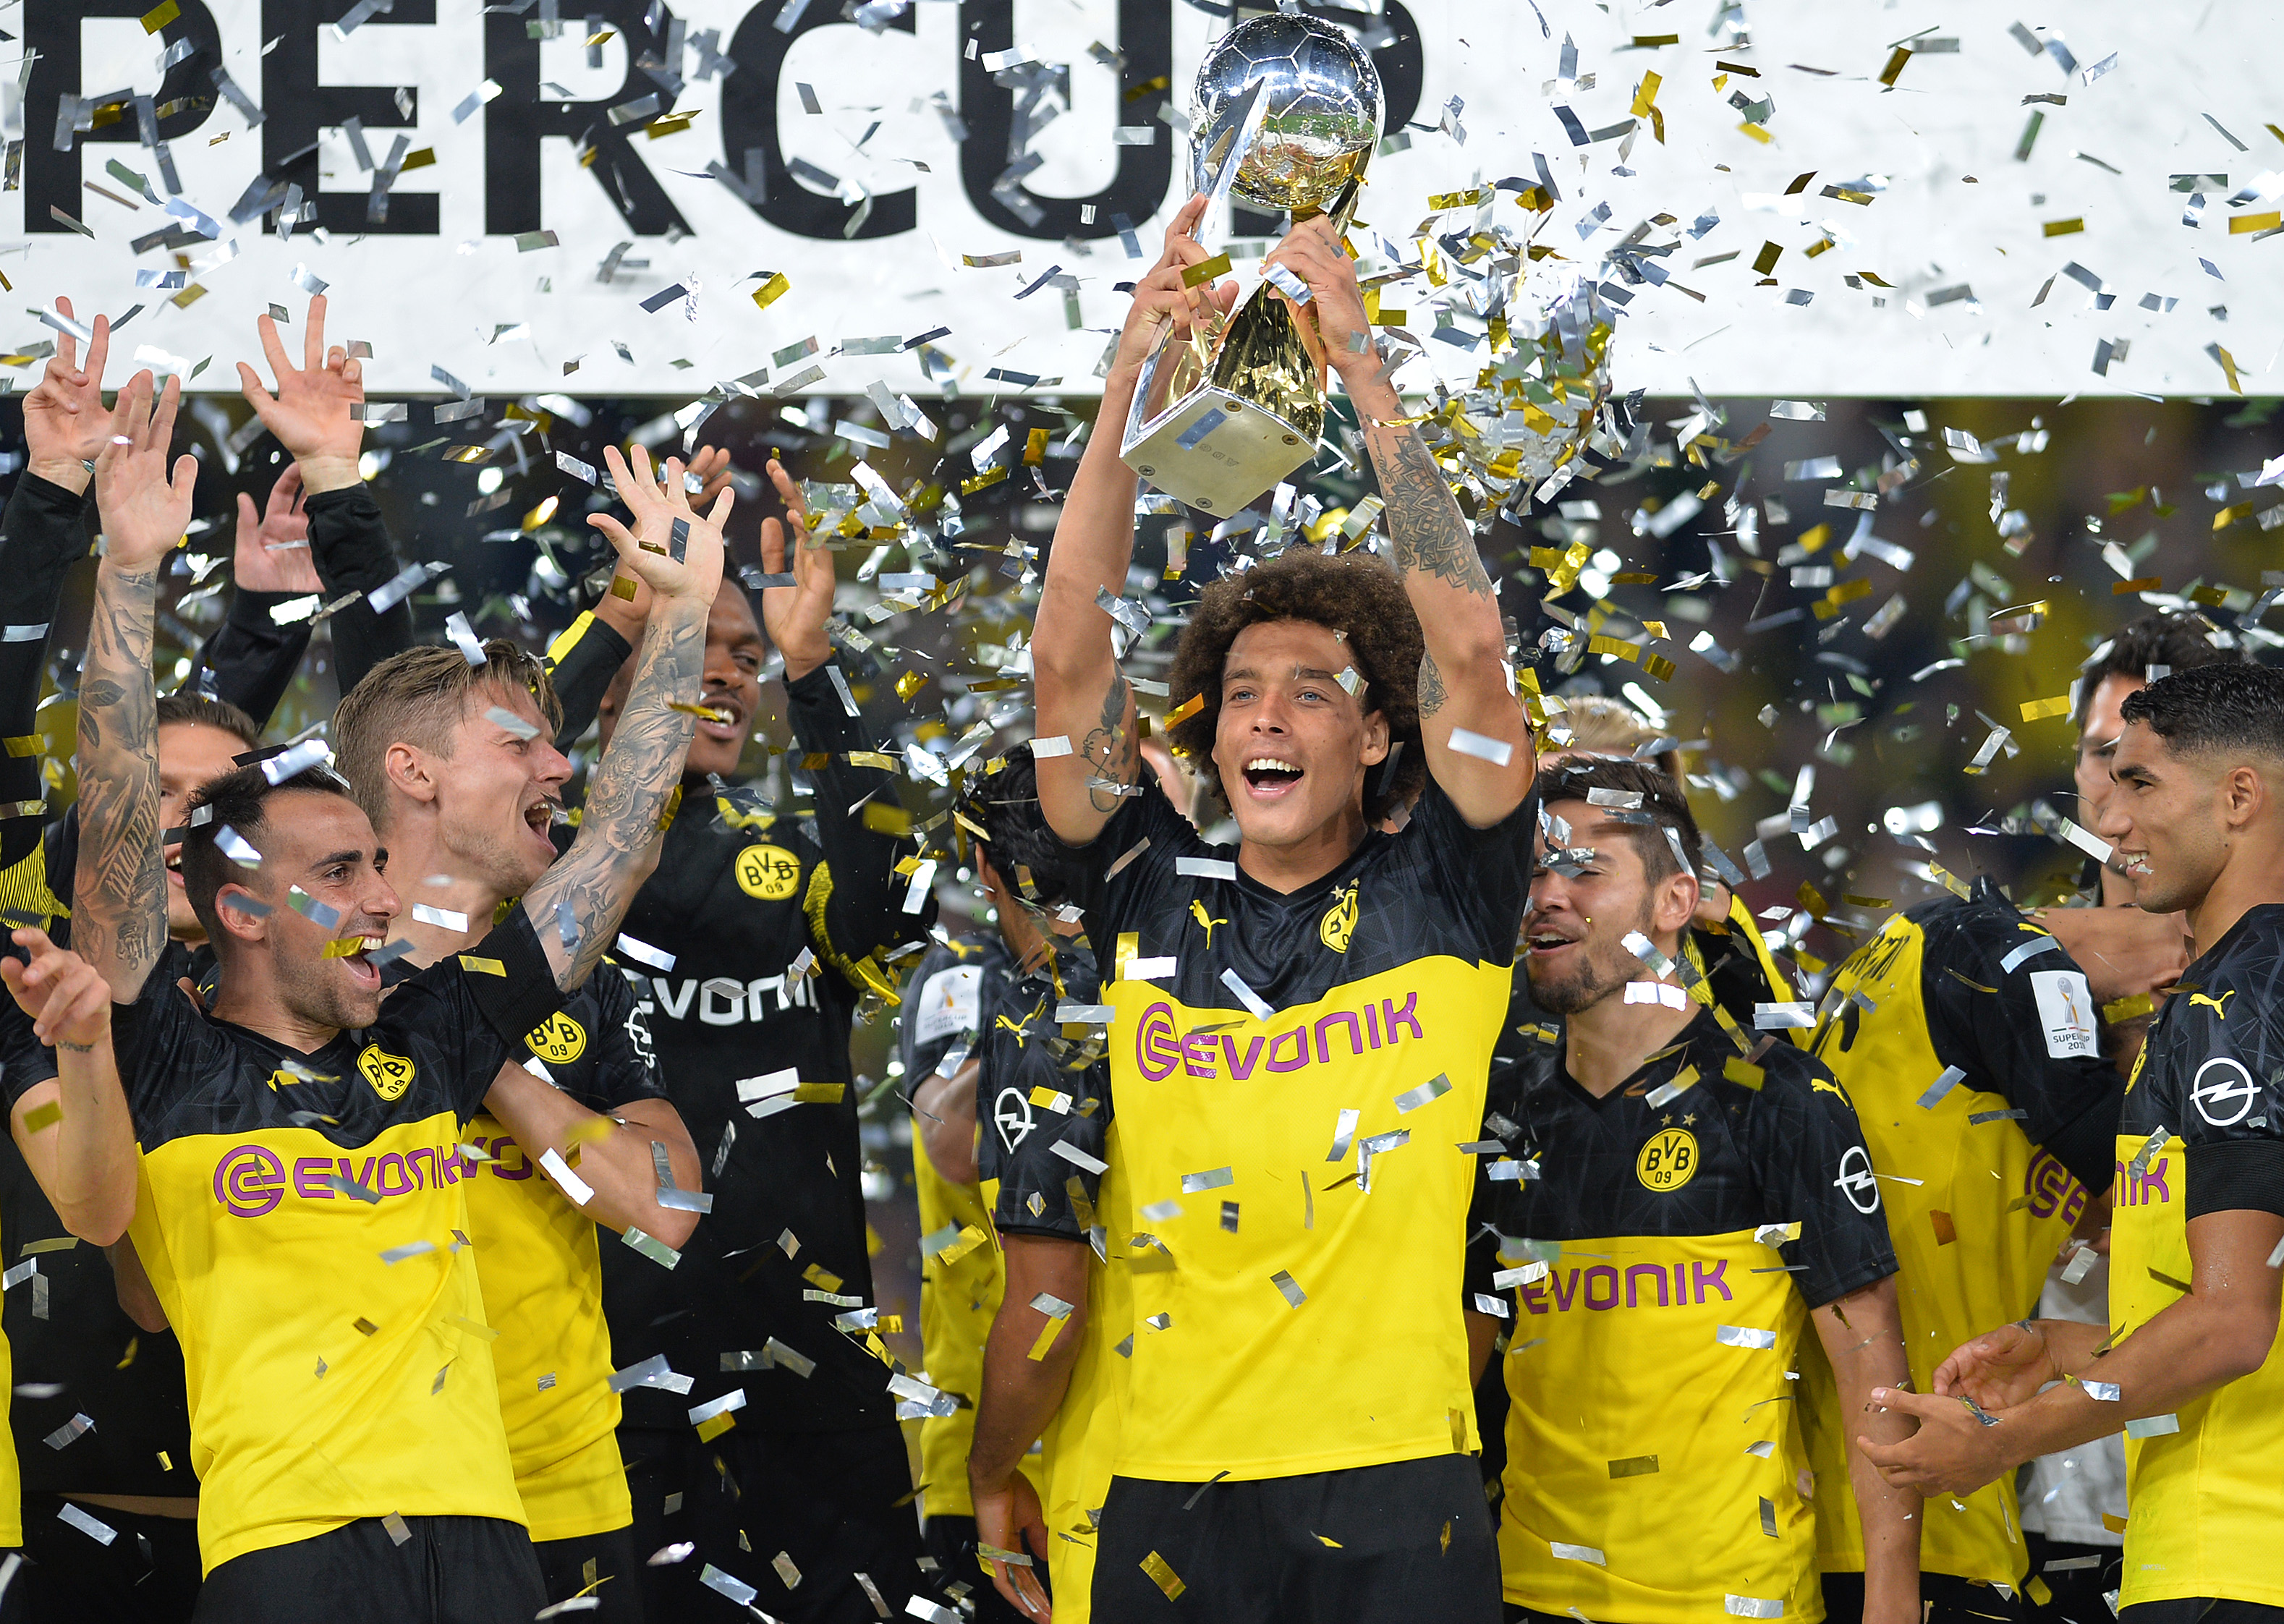 Borussia Dortmund v Bayern Muenchen - DFL Supercup 2019